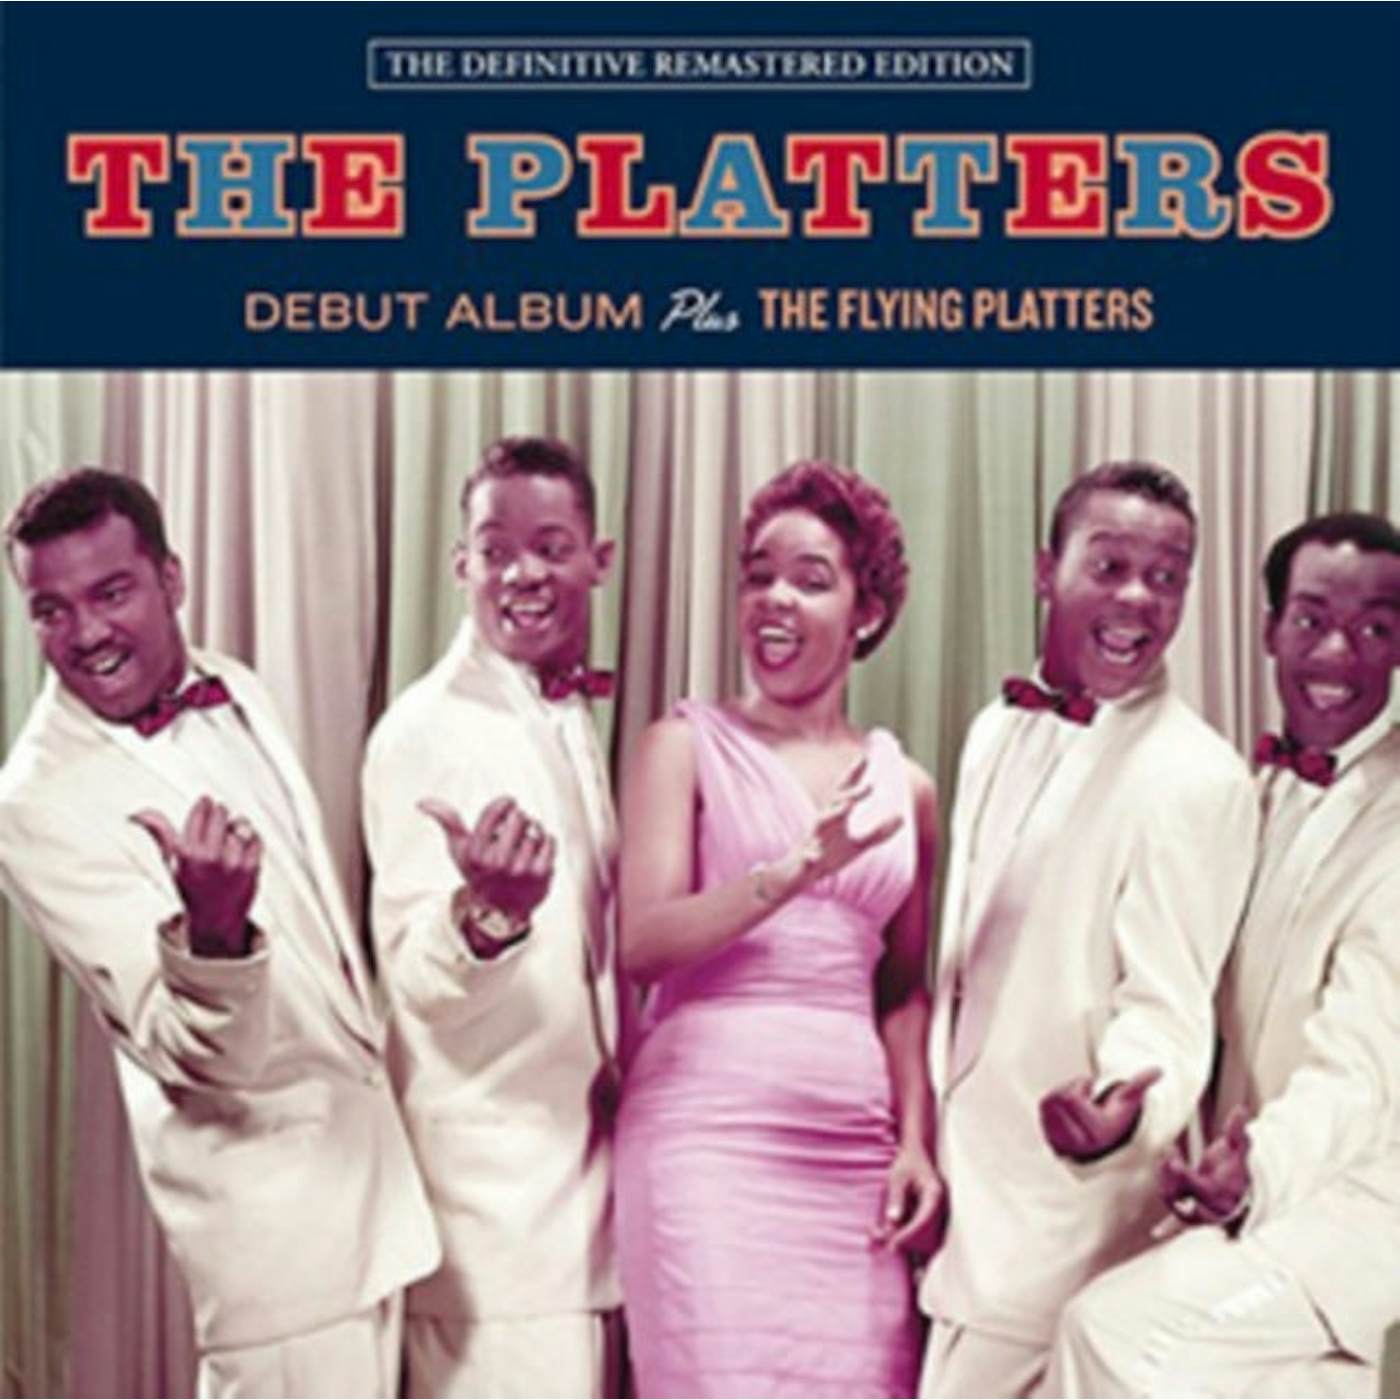 The Platters CD - Debut Album / The Flying Platters